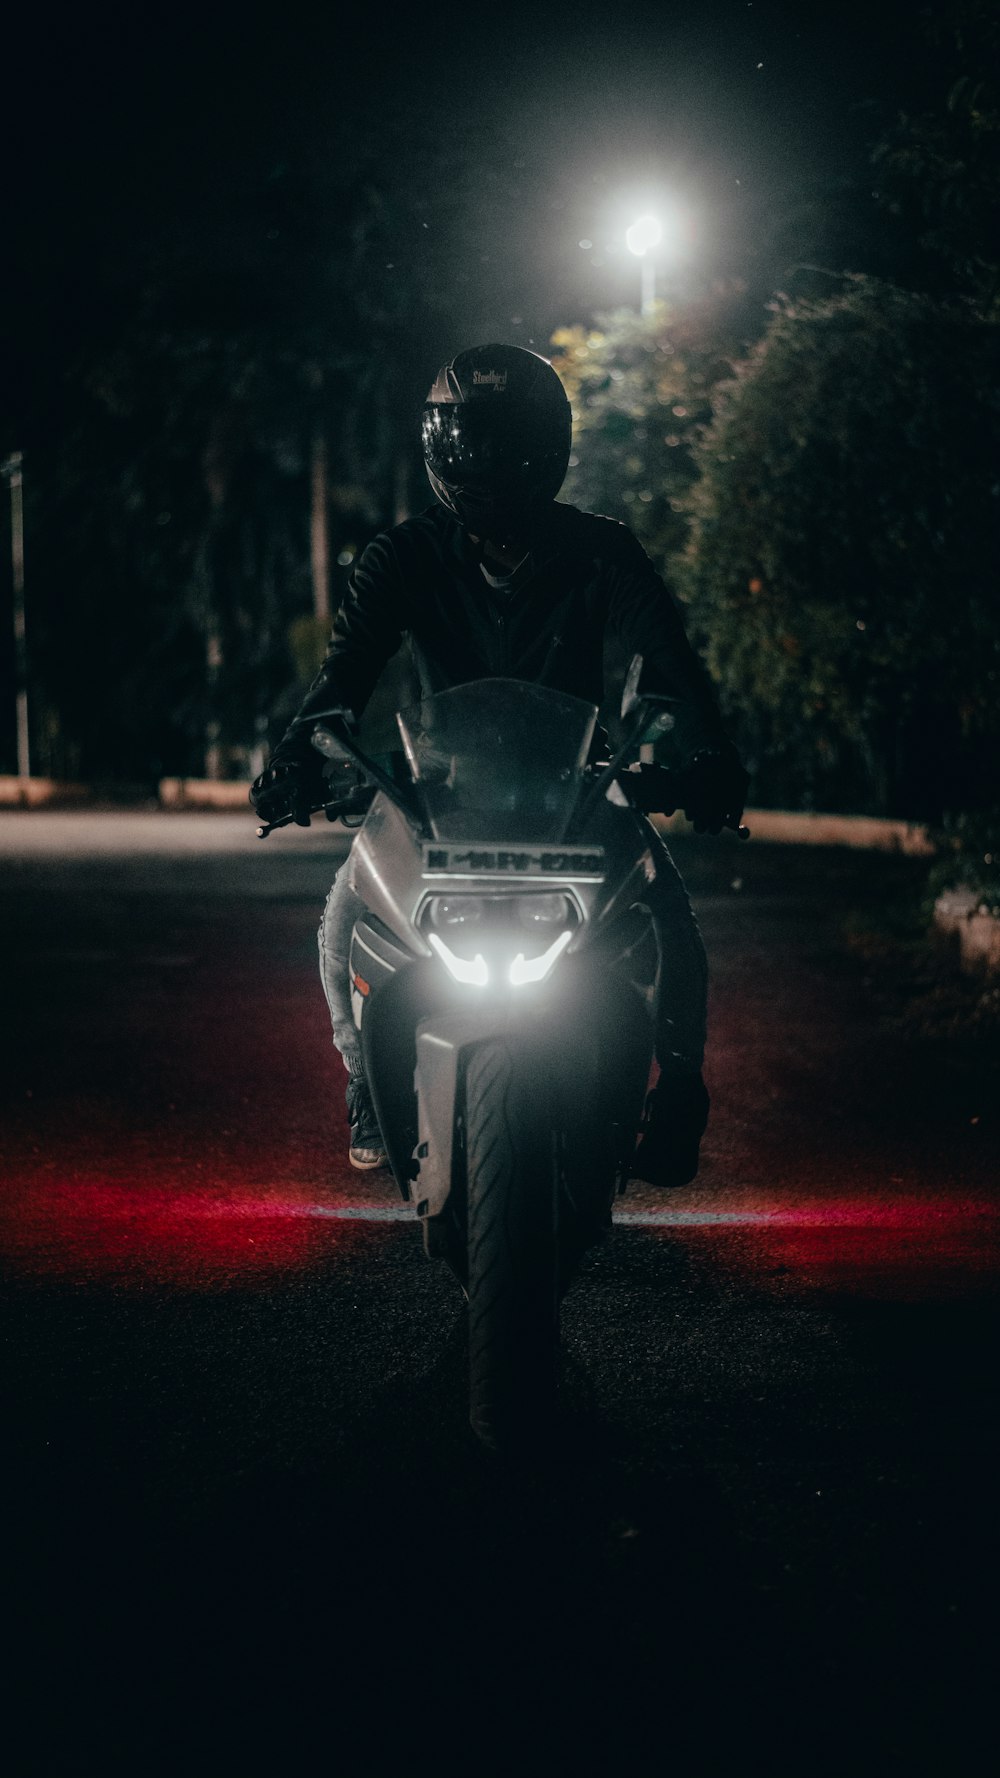 man in black jacket riding on motorcycle during night time